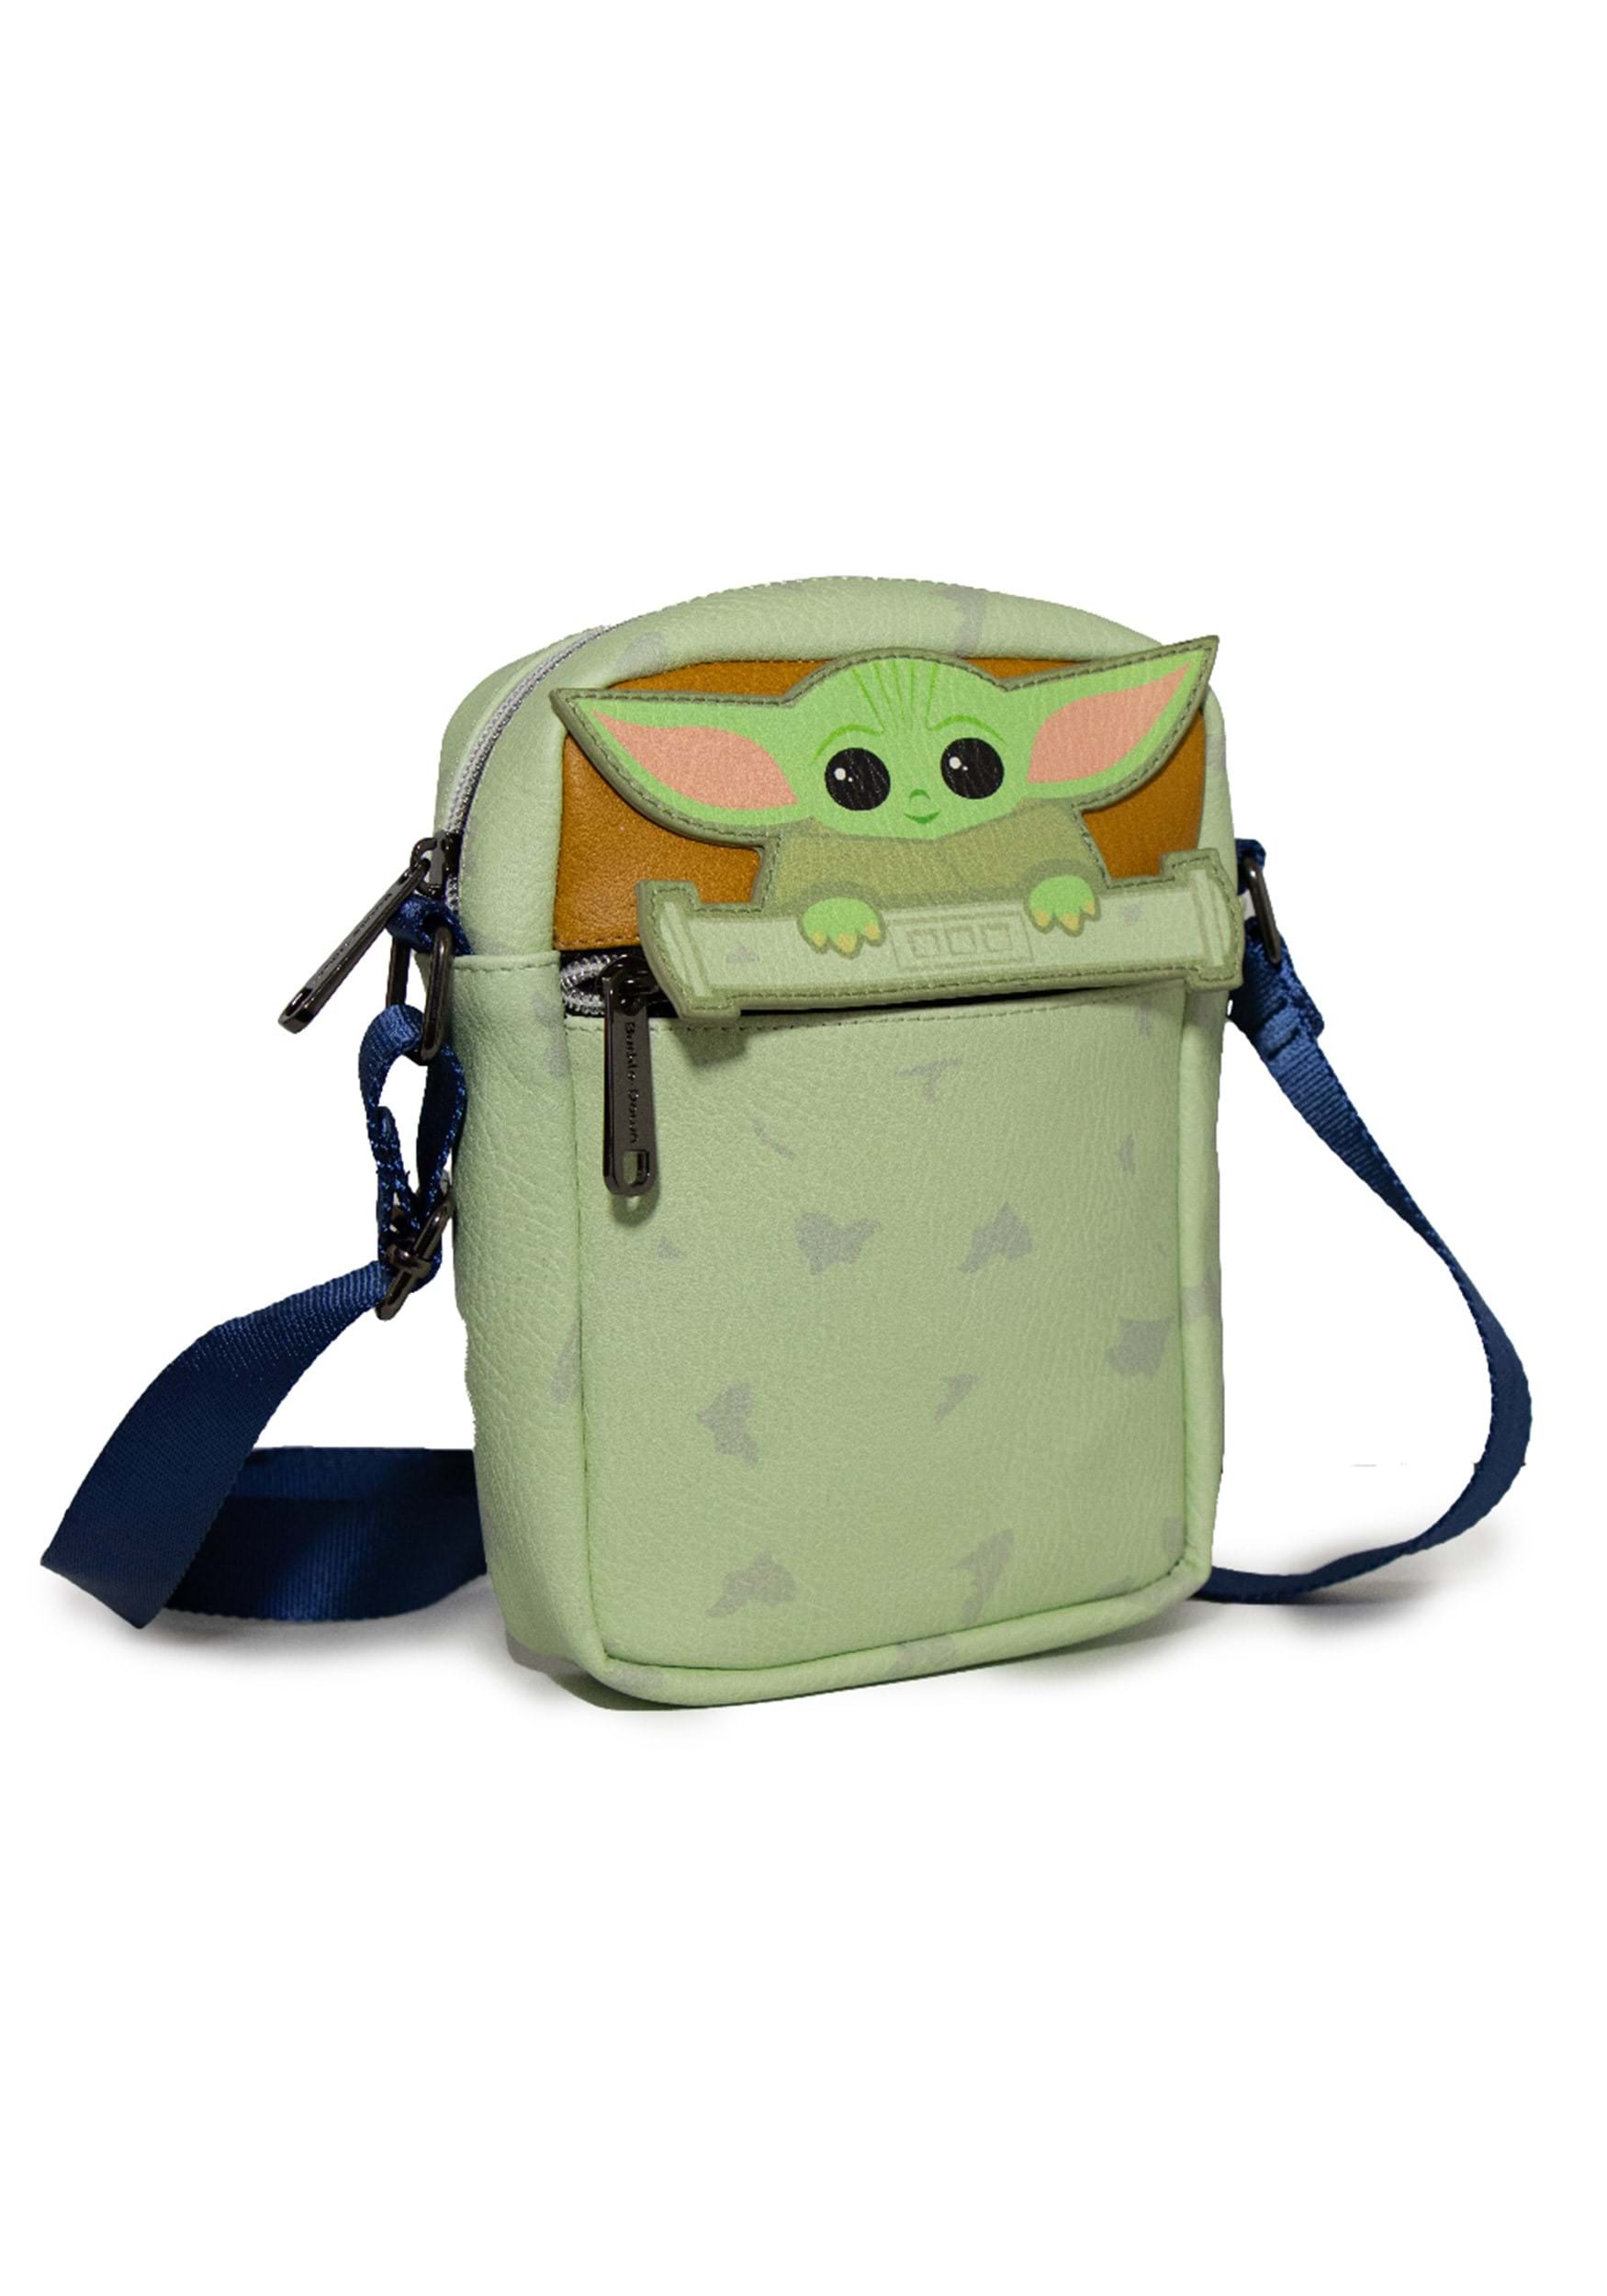 https://images.fun.com/products/69411/2-1-163481/star-wars-the-child-crossbody-bag-purse-alt-1.jpg